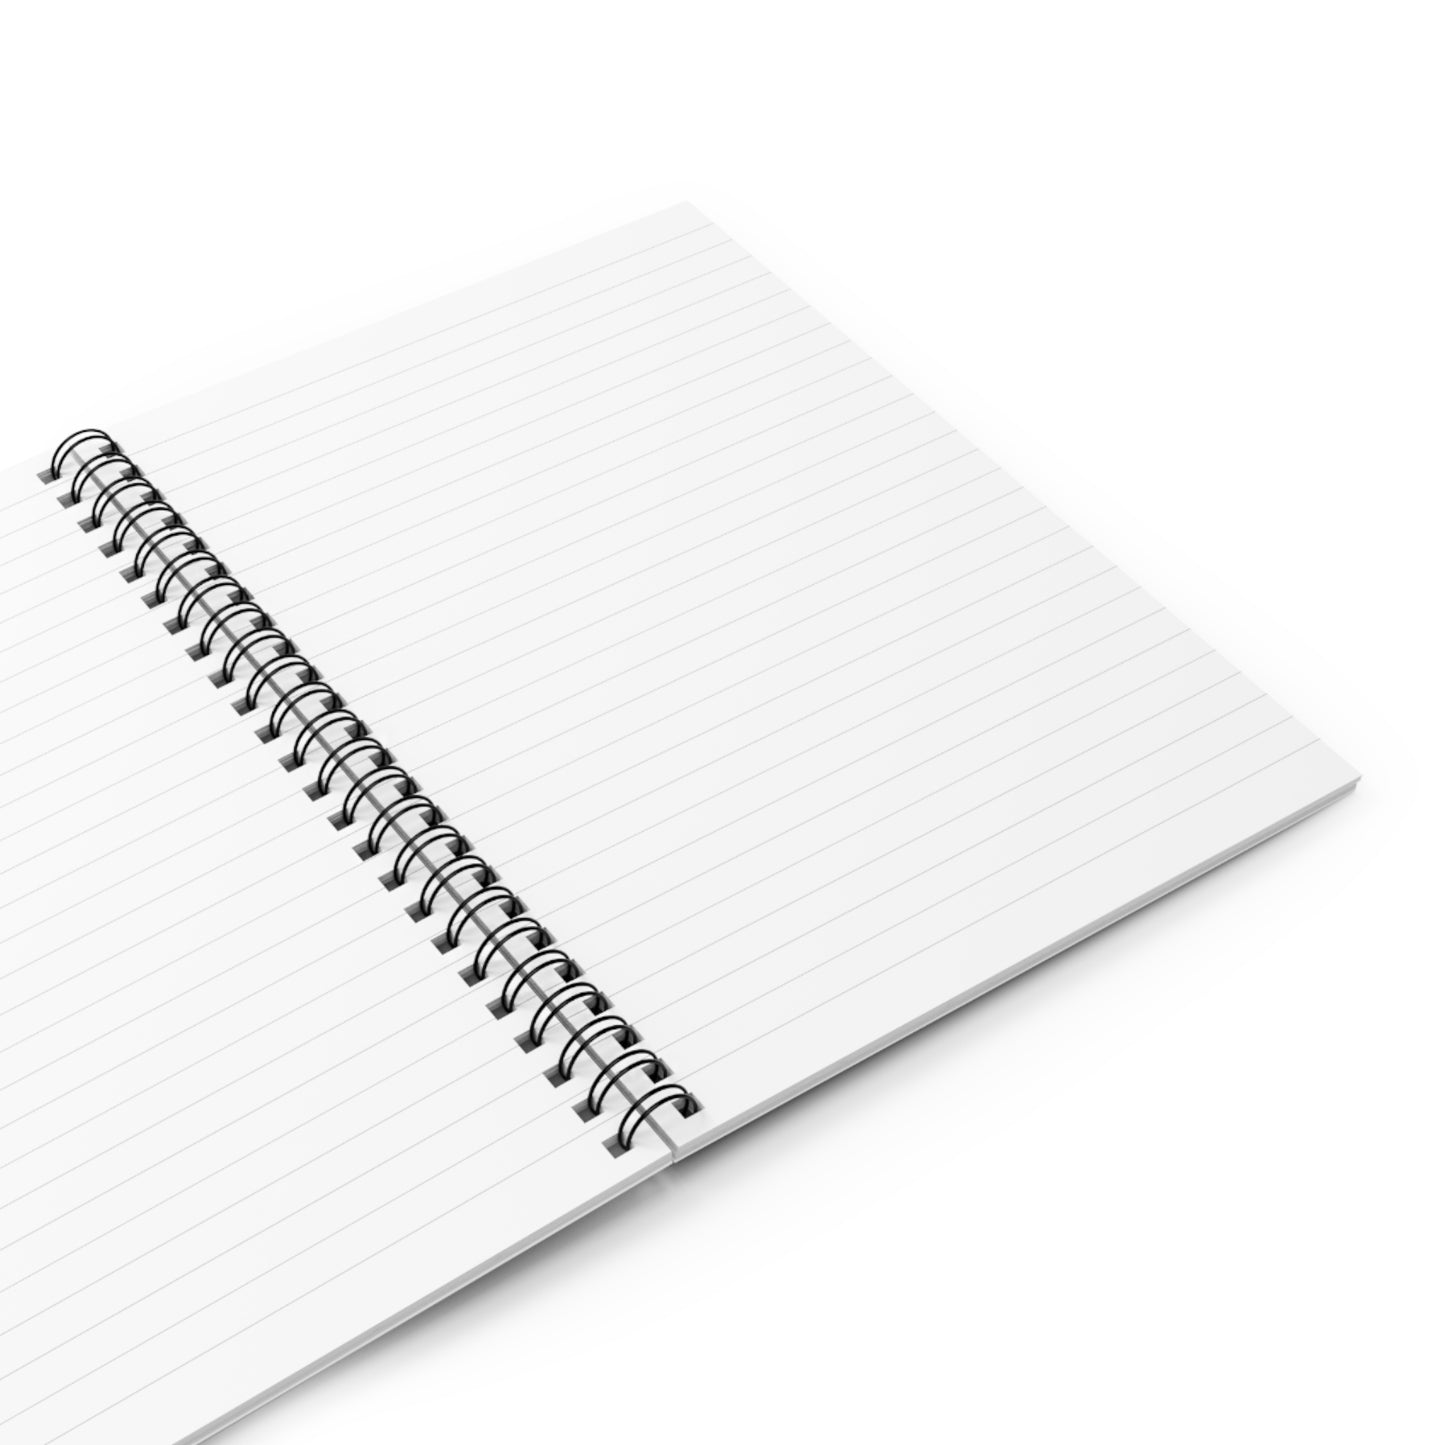 Line Bouquet Notebook (White)